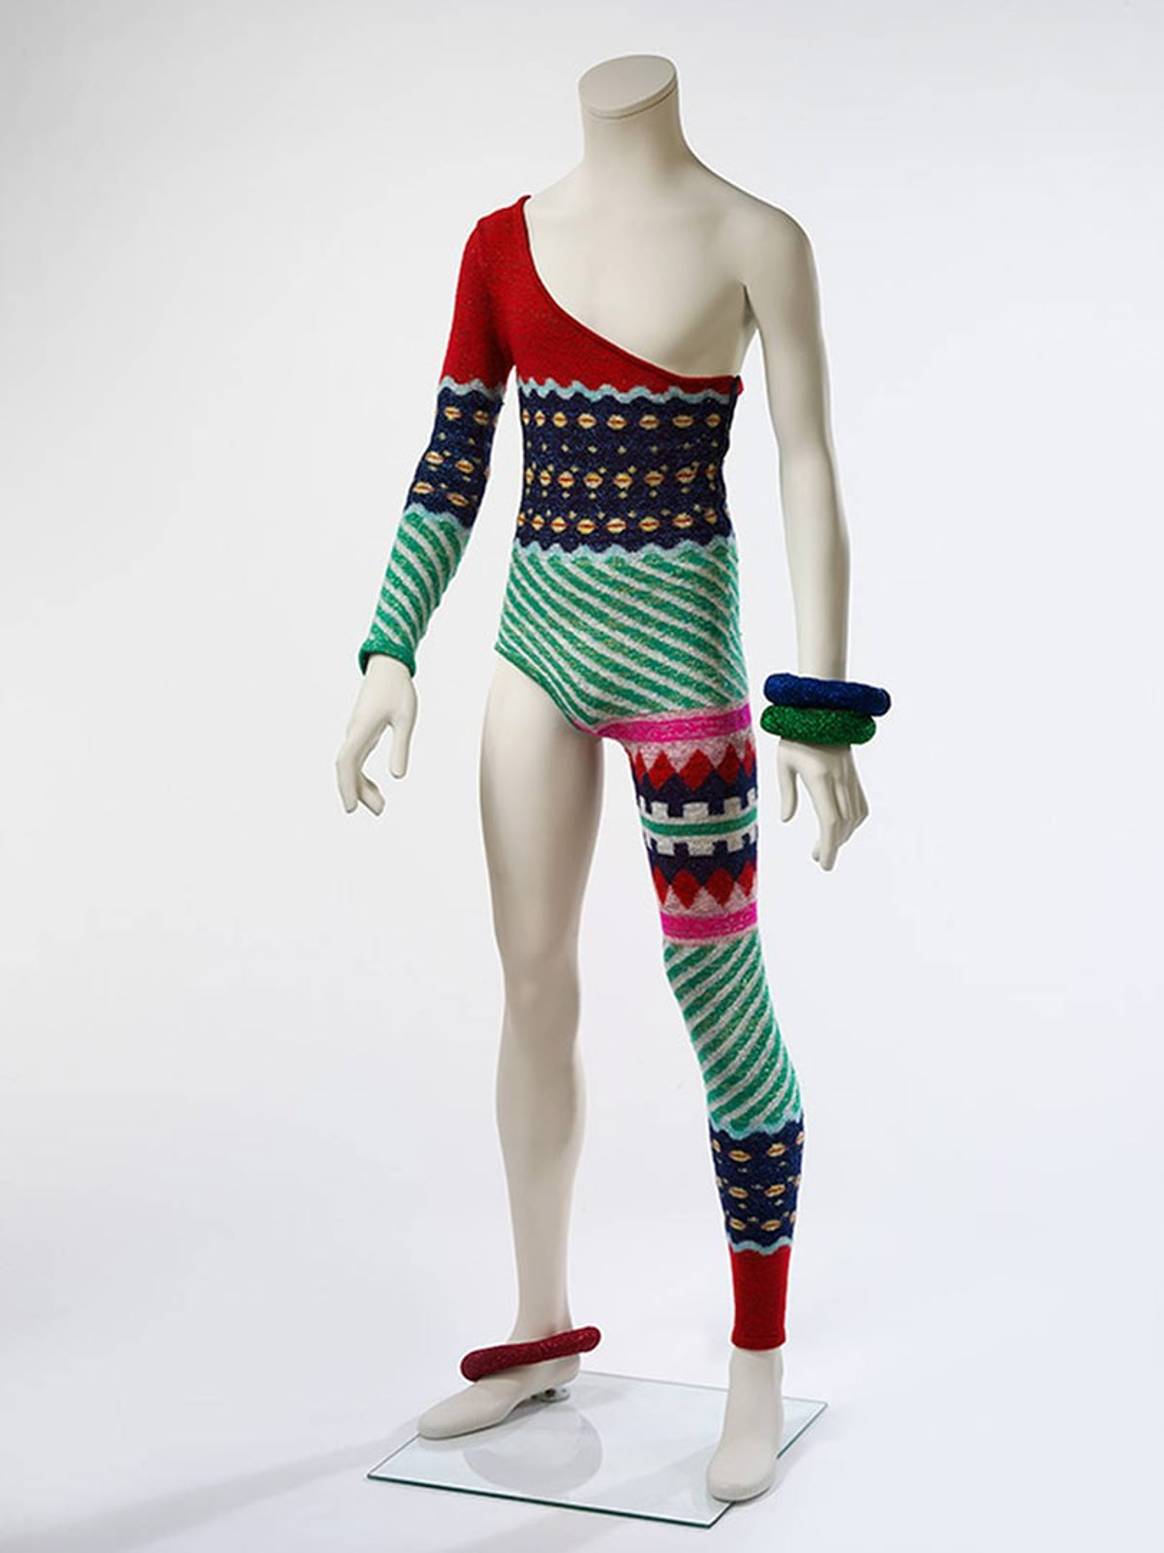 Asymmetrisch pak van Kansai
Yamamoto voor David Bowie. Foto: Brooklyn Museum